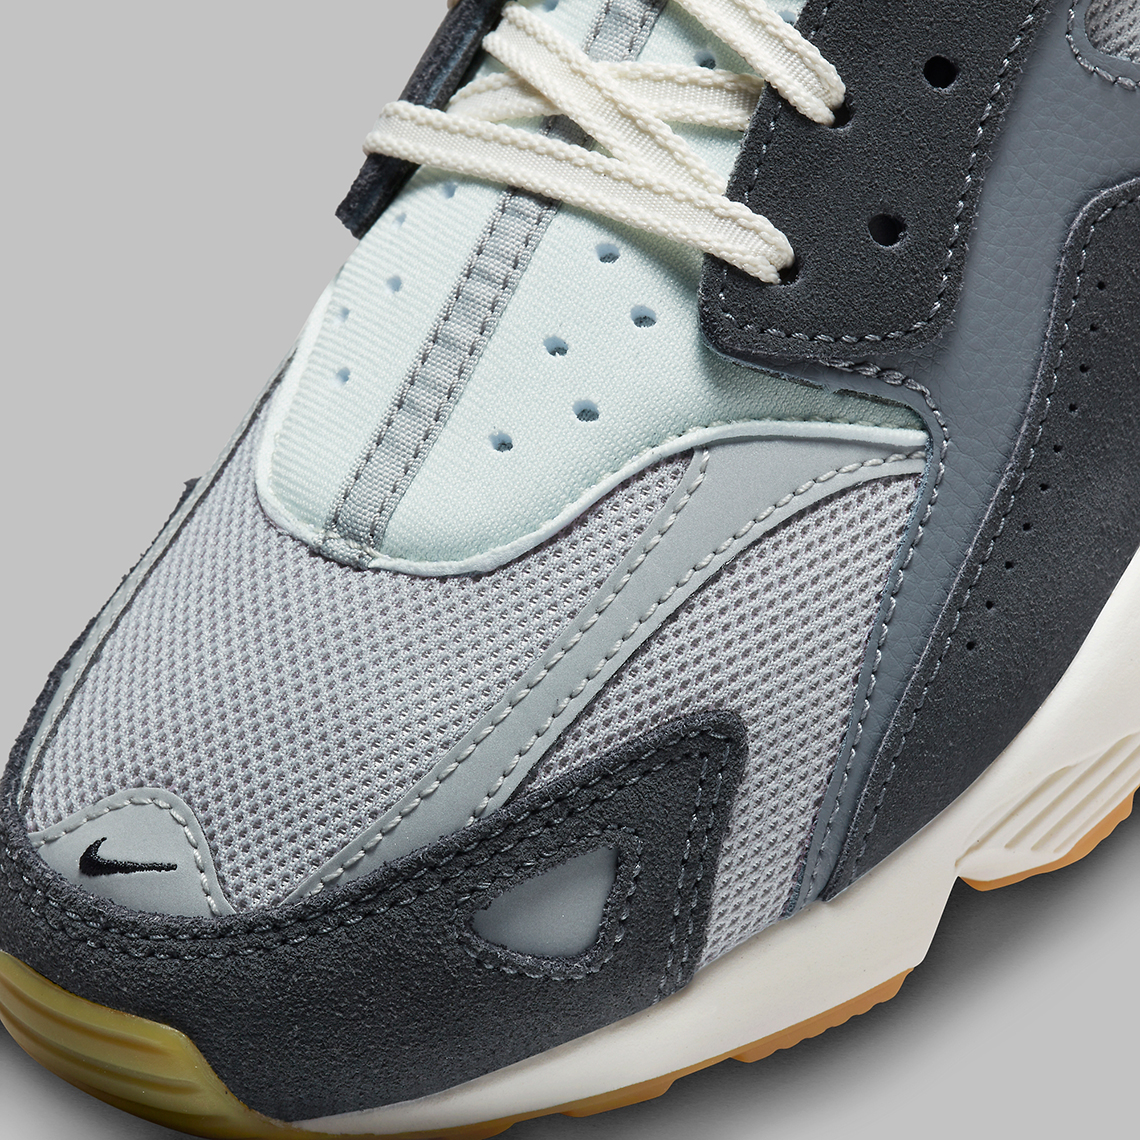 Nike Huarache Runner Light Smoke Grey Fj0709 001 8